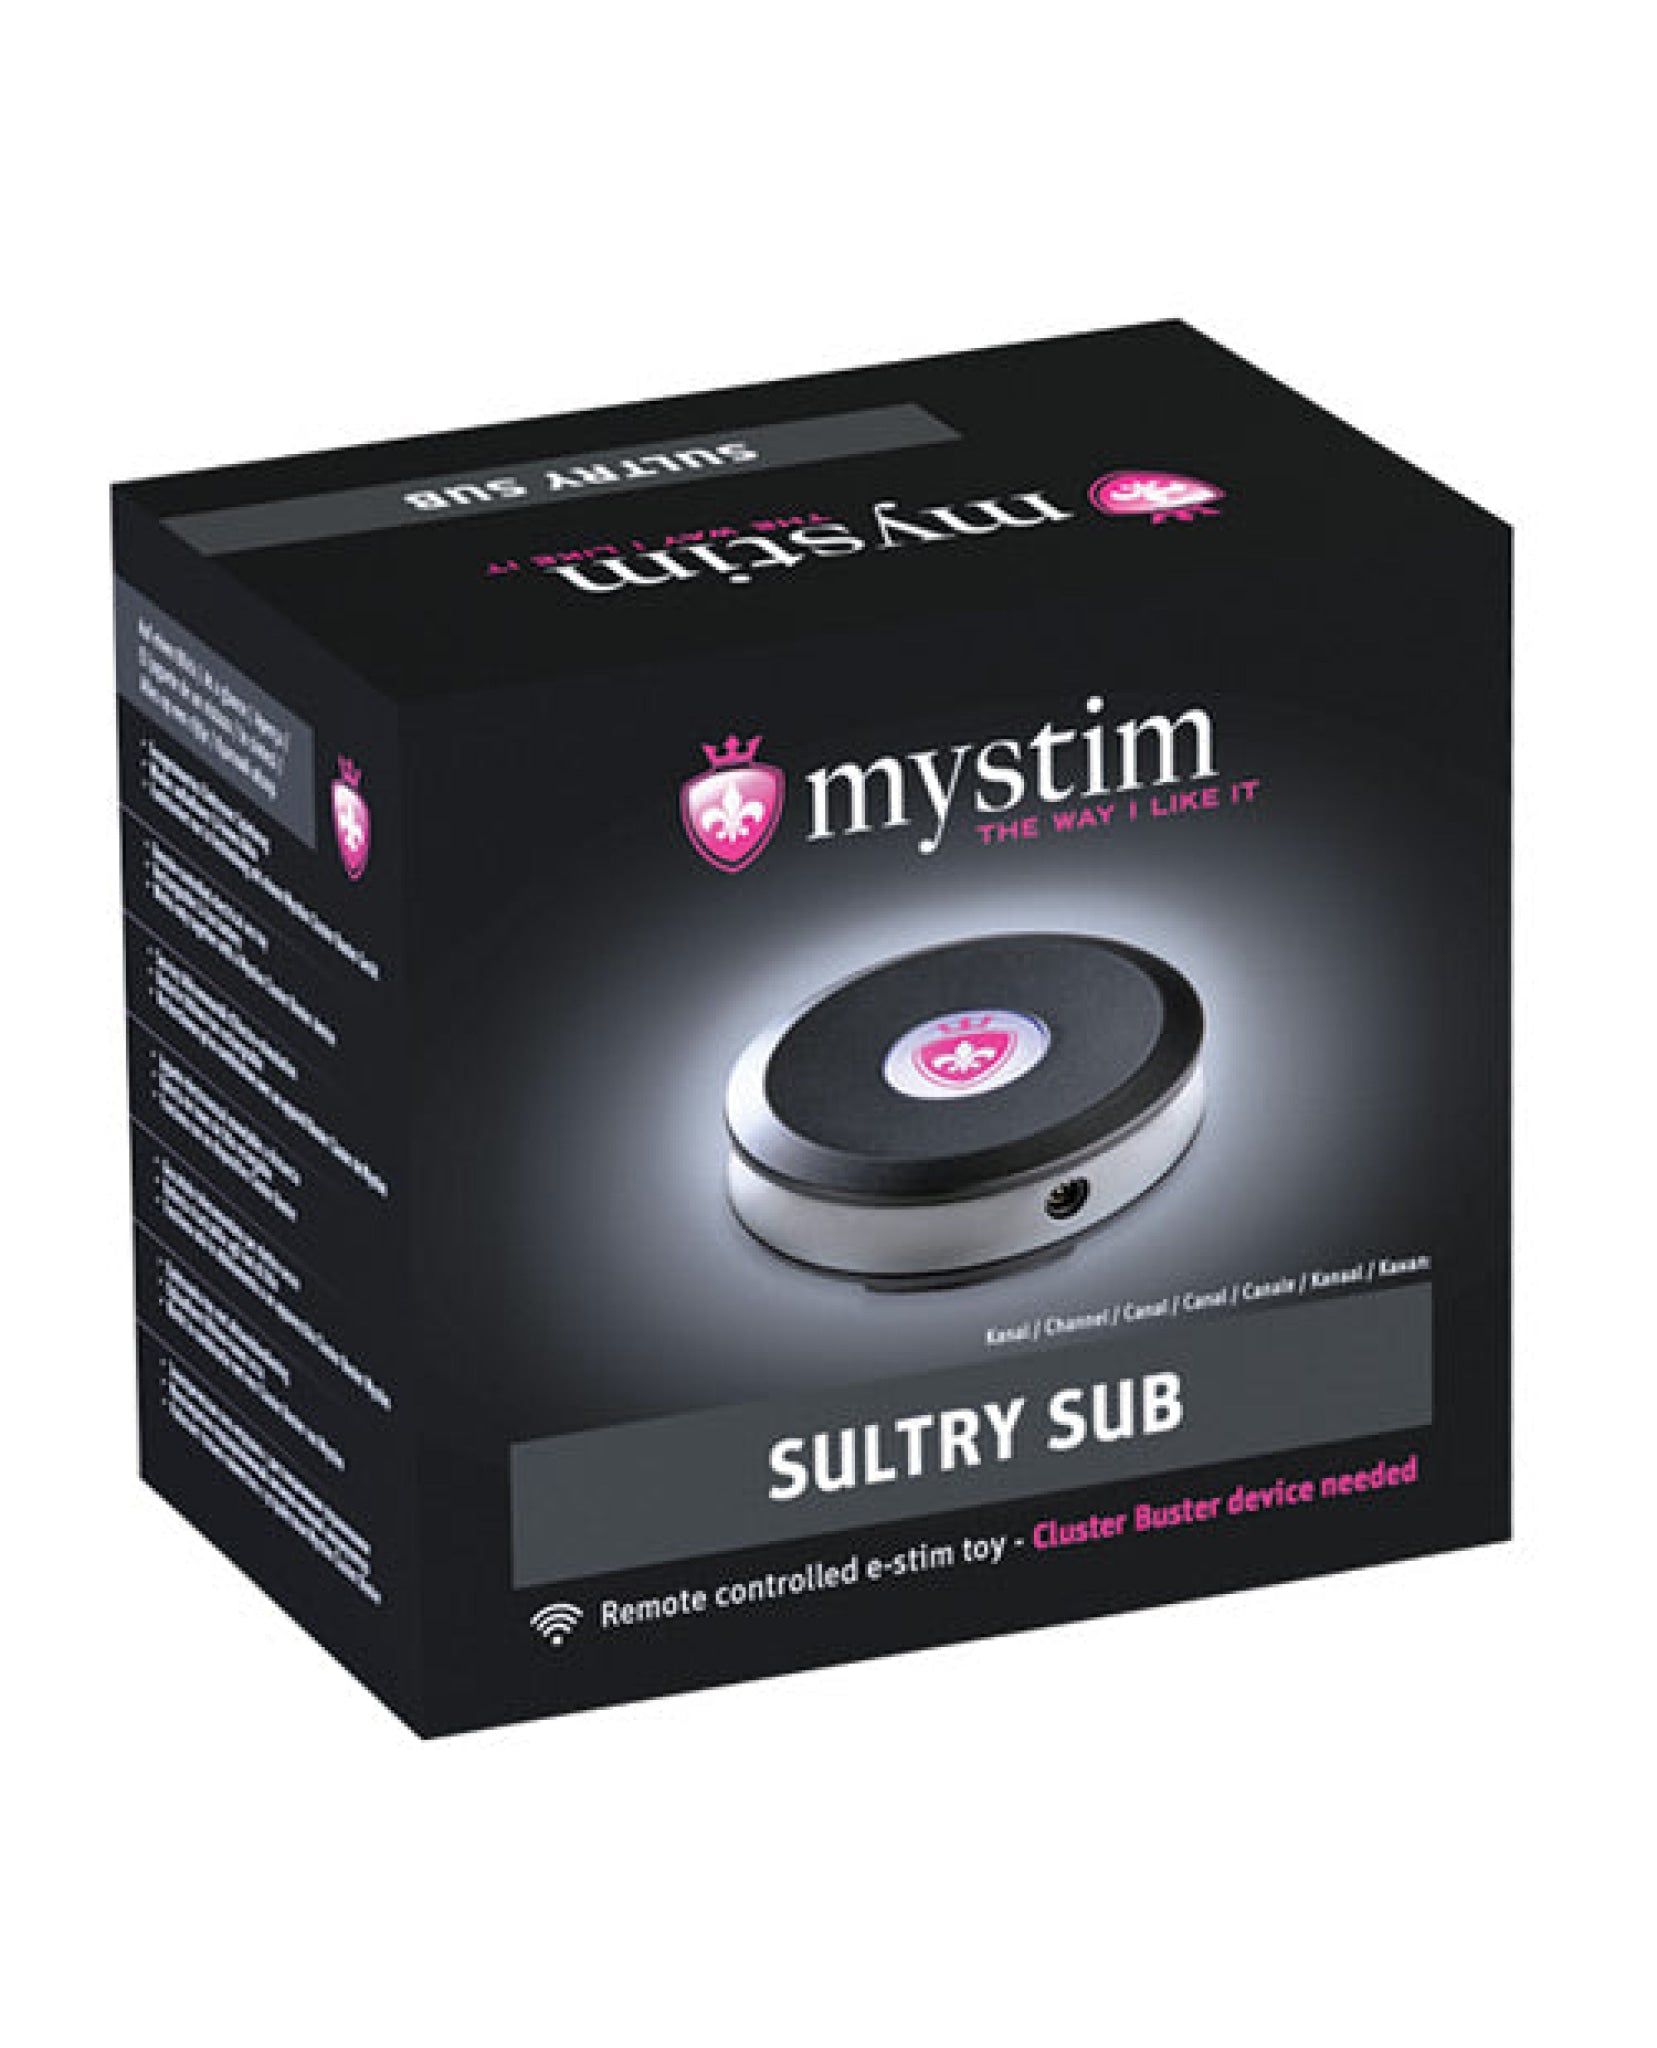 Mystim Sultry Subs Receiver Channel 2 - Black Mystim